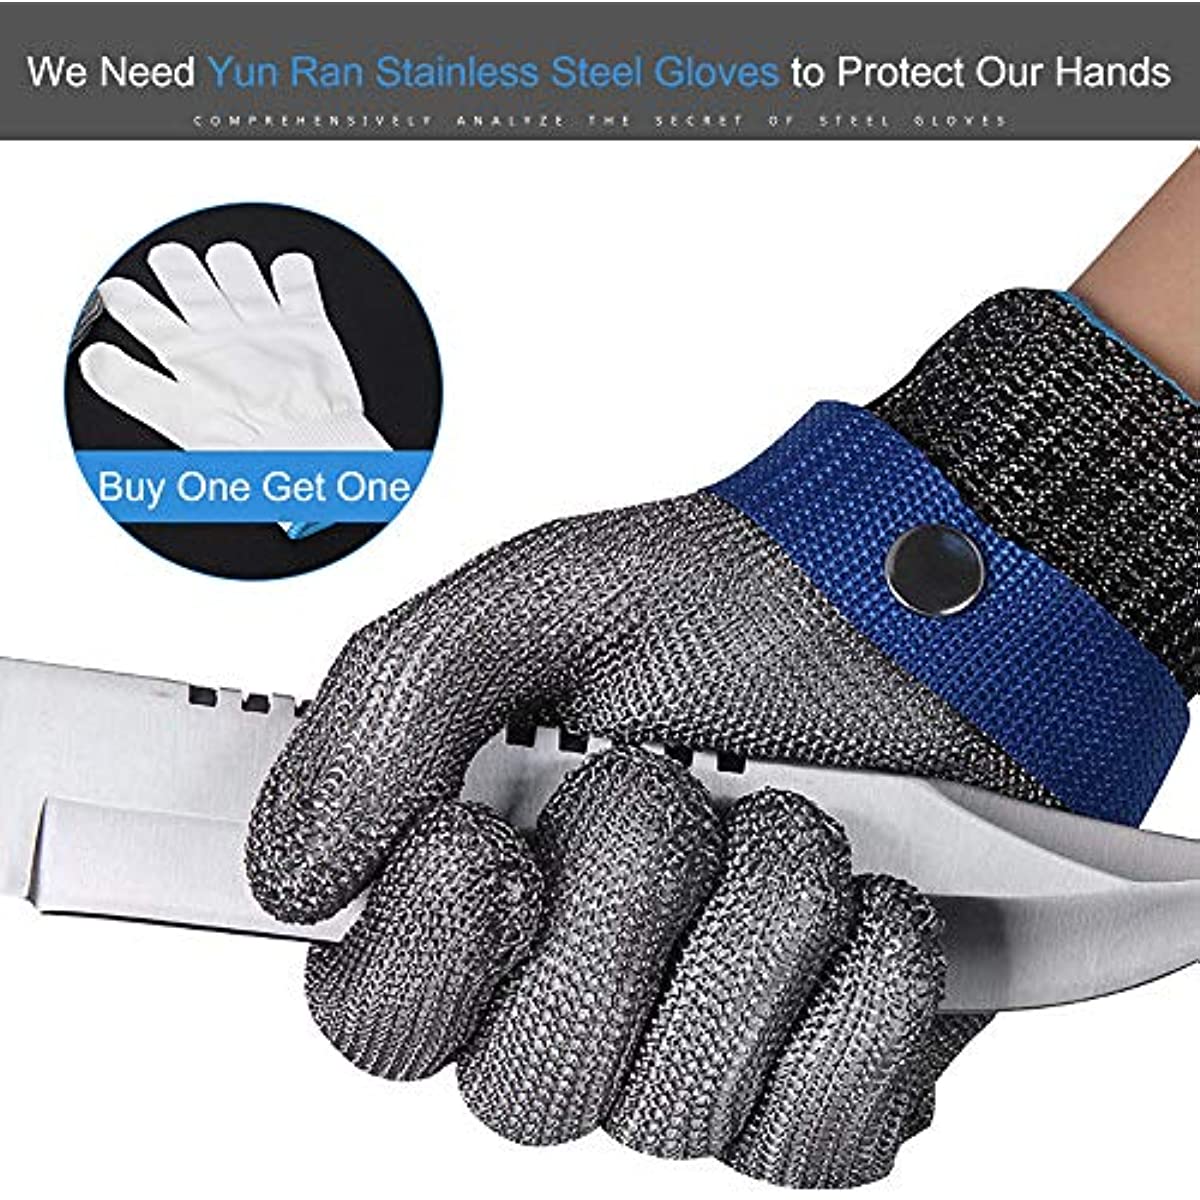 San Jamar MGA515 Stainless Steel Mesh Cut Resistant Glove